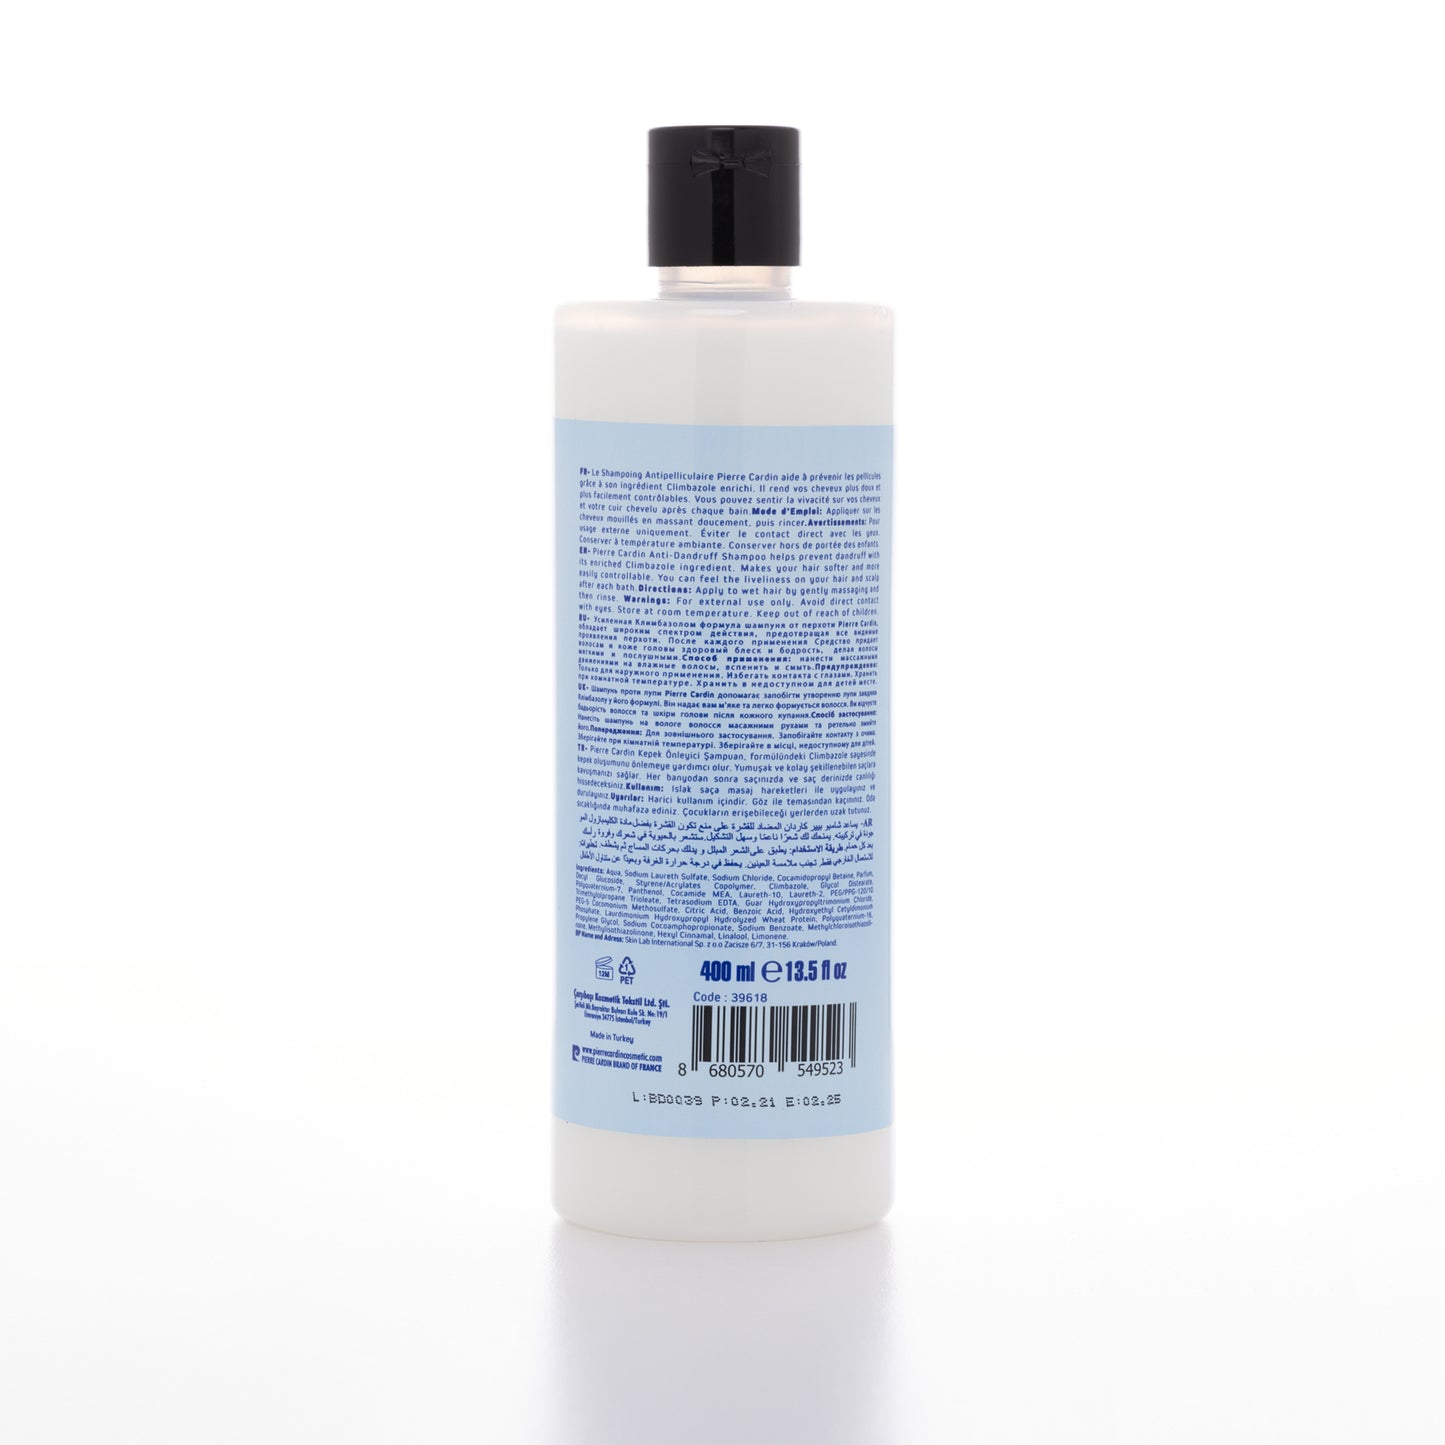 Pierre Cardin | Shampoo |  Anti-Dandruff | 400 ml